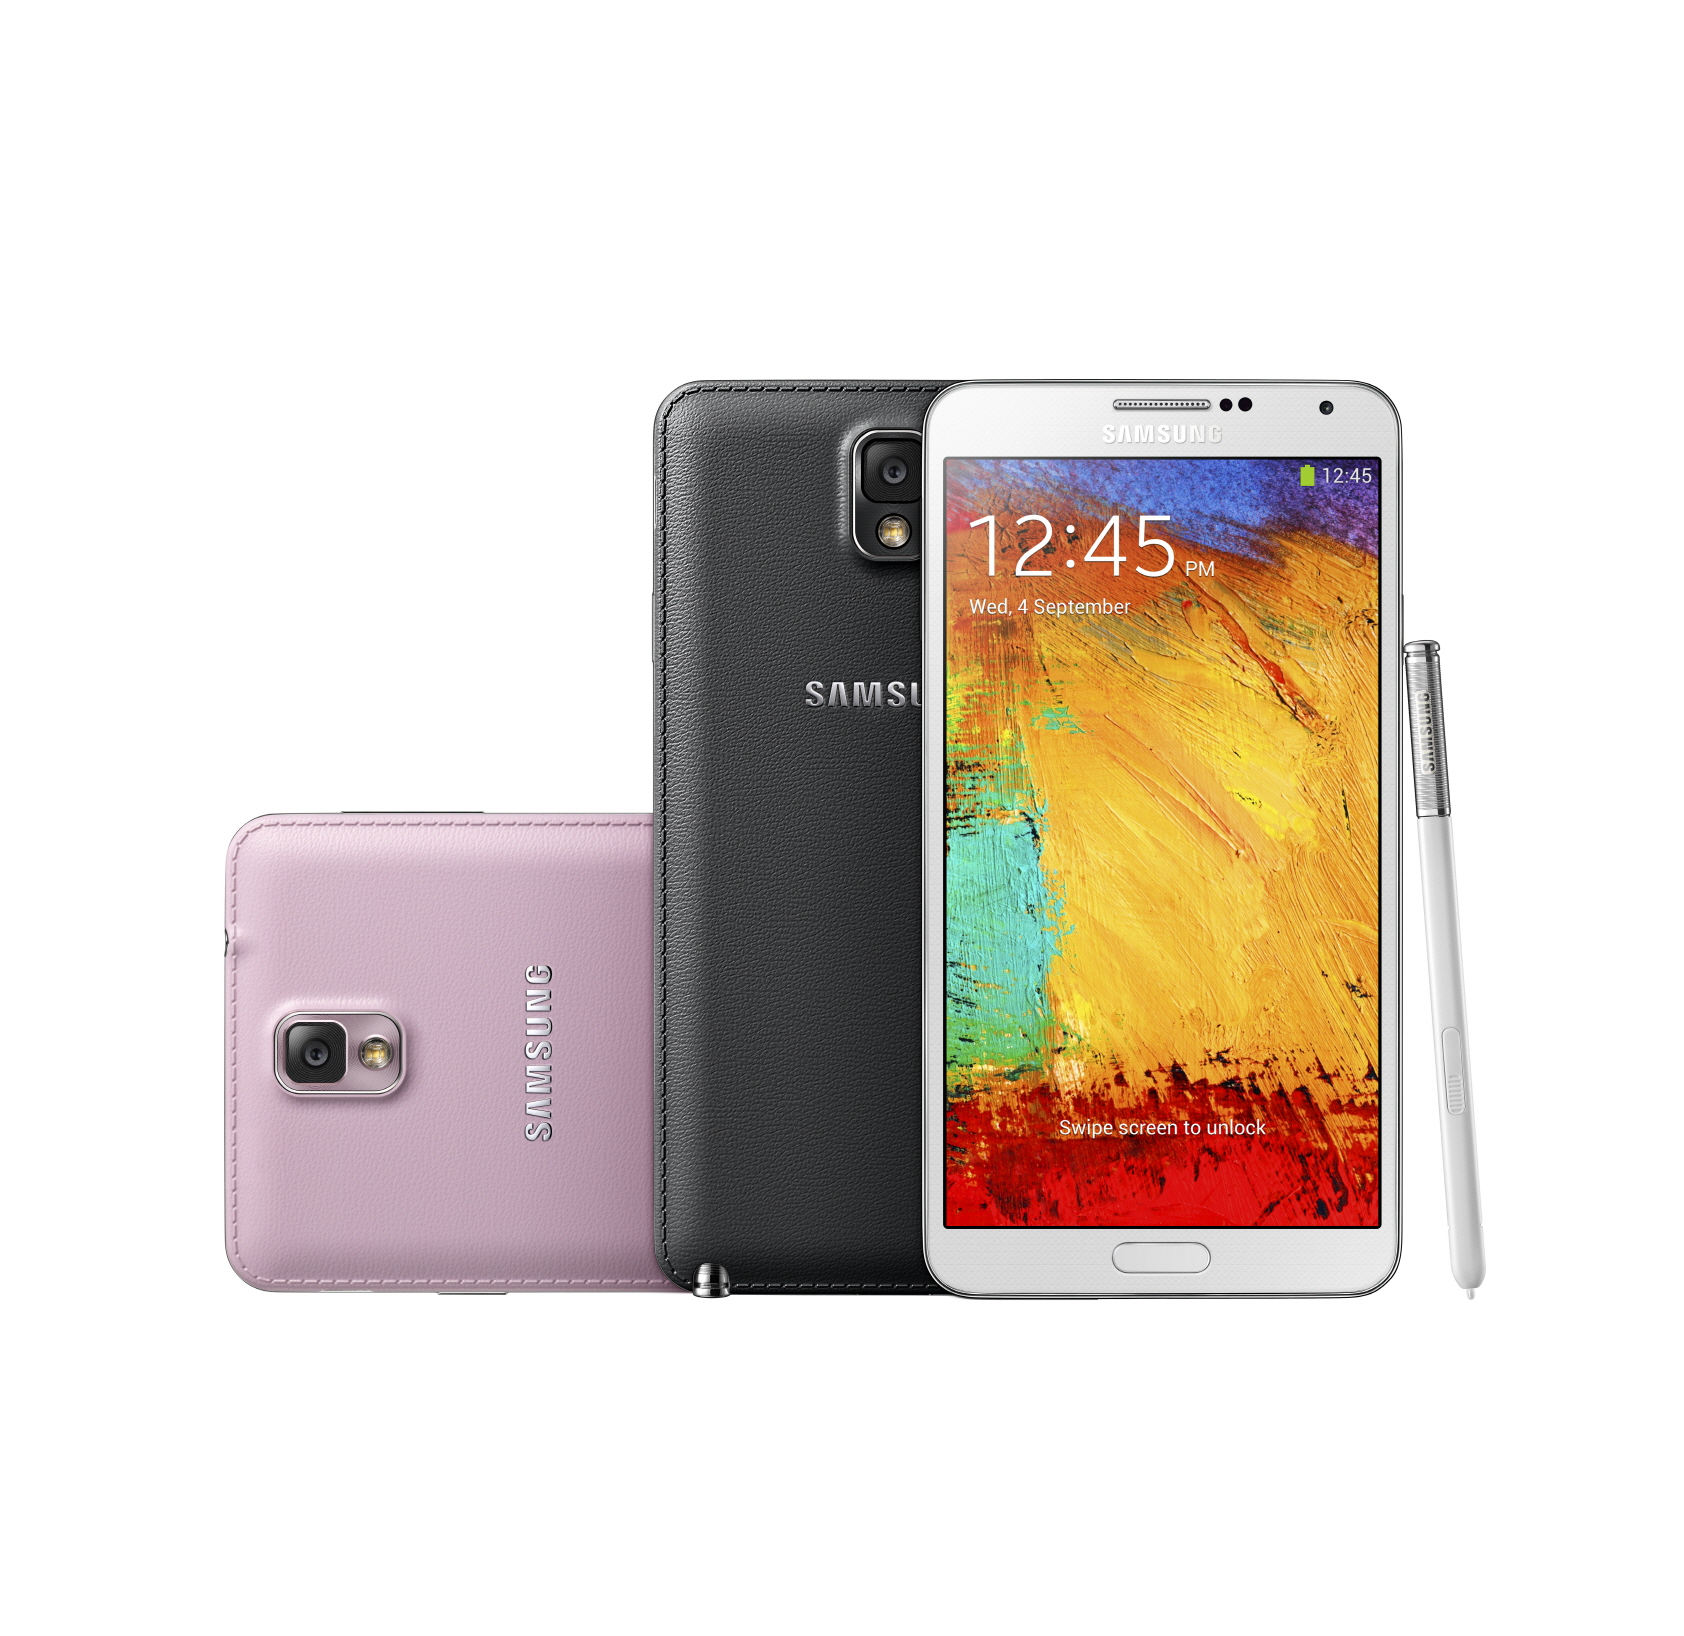 Kudde Vernietigen D.w.z Samsung Galaxy Note 3 Announced: 5.7-inch Display, New Software & More